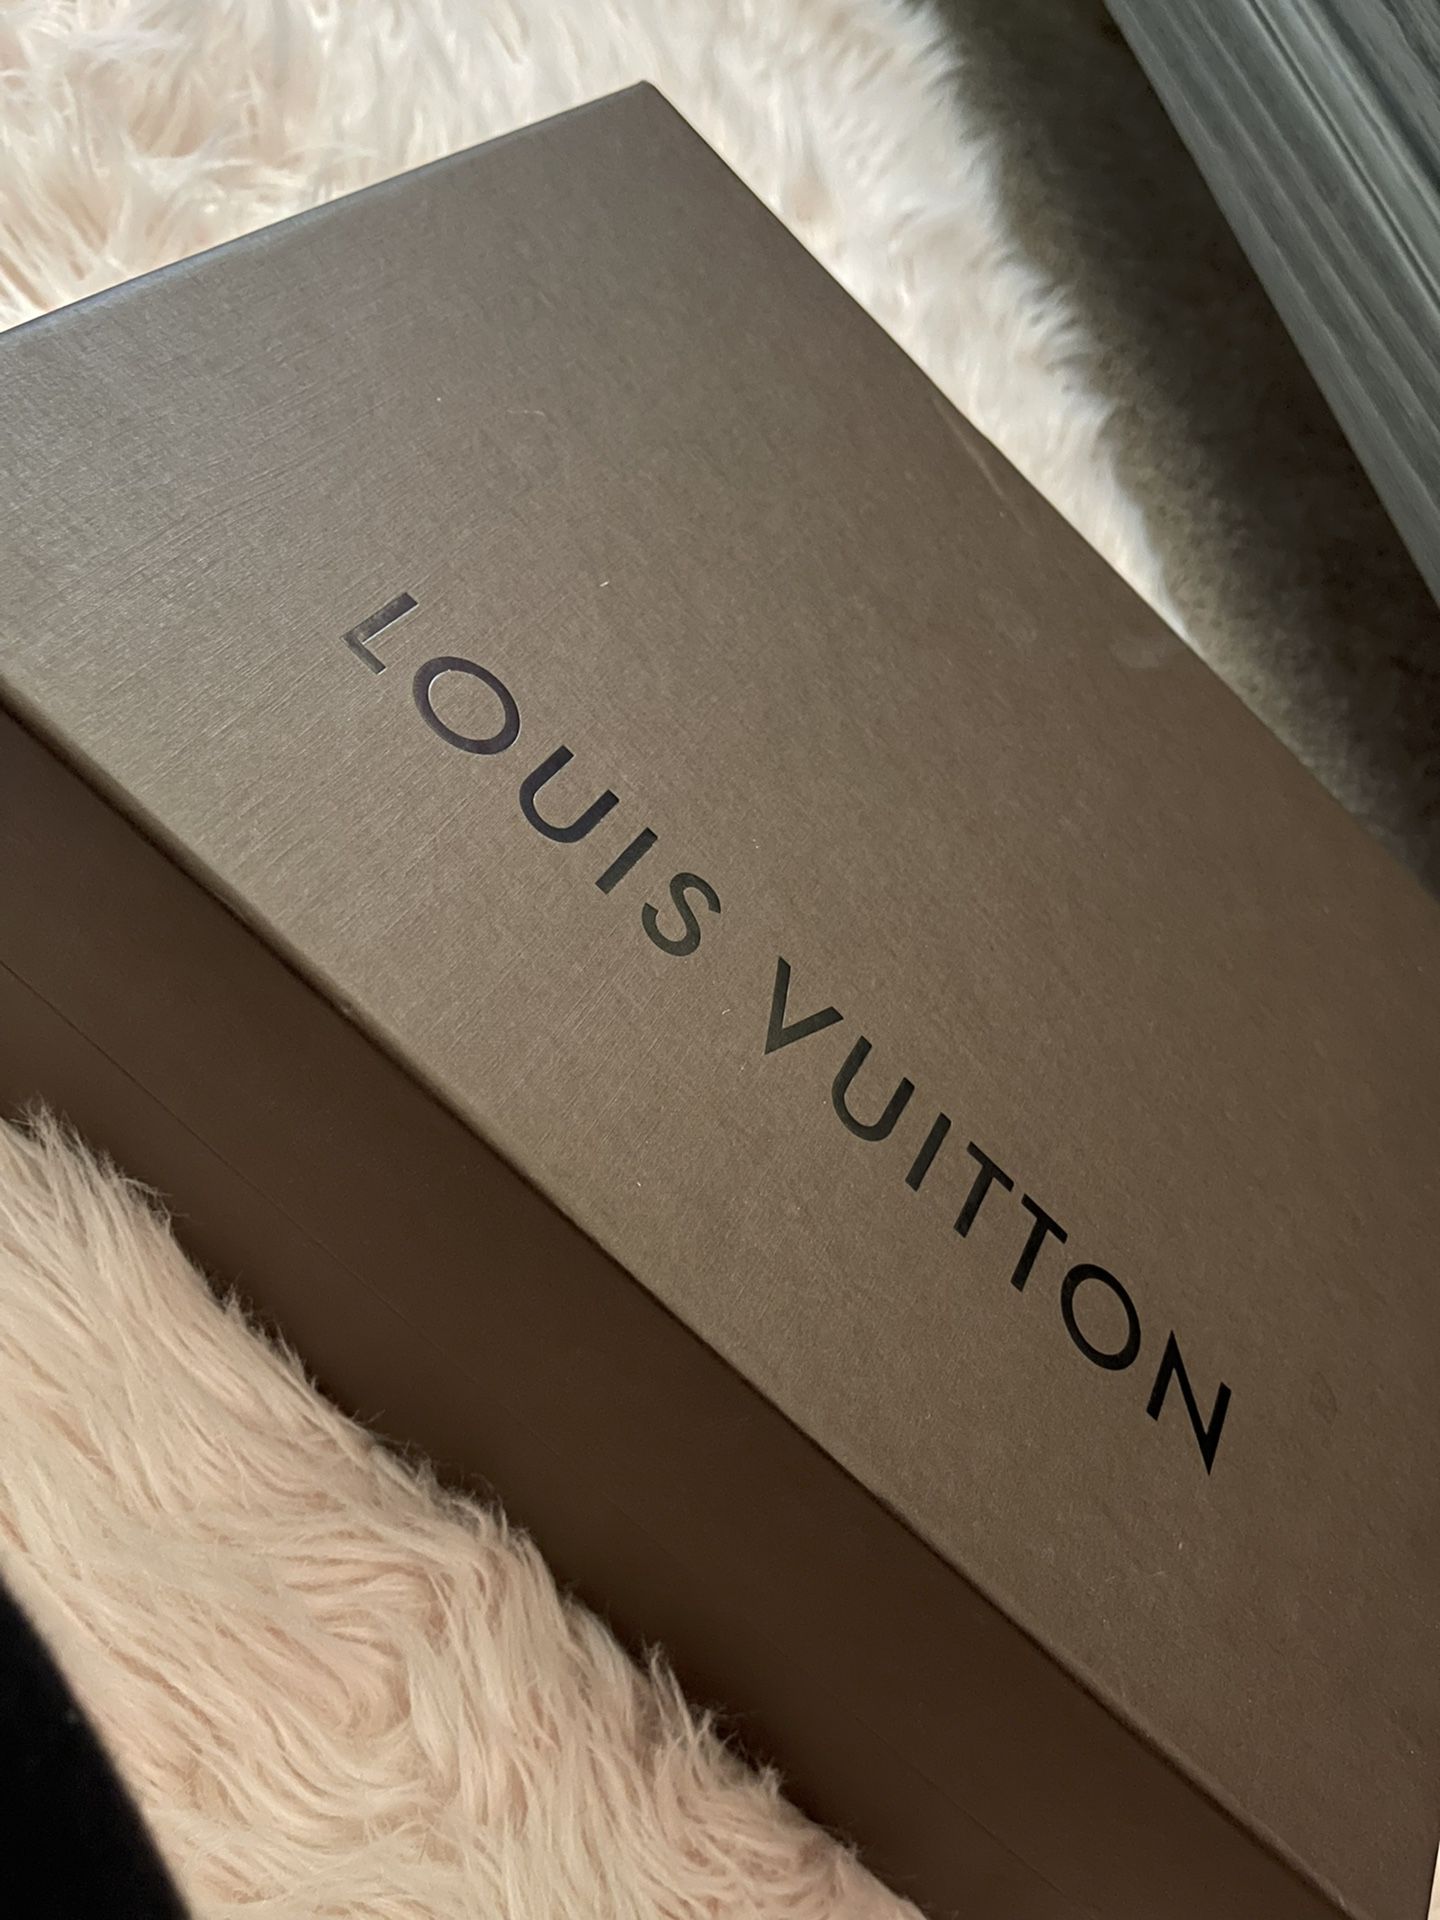 Louis Vuitton Speedy Bandouliere 35 for Sale in Whittier, CA - OfferUp